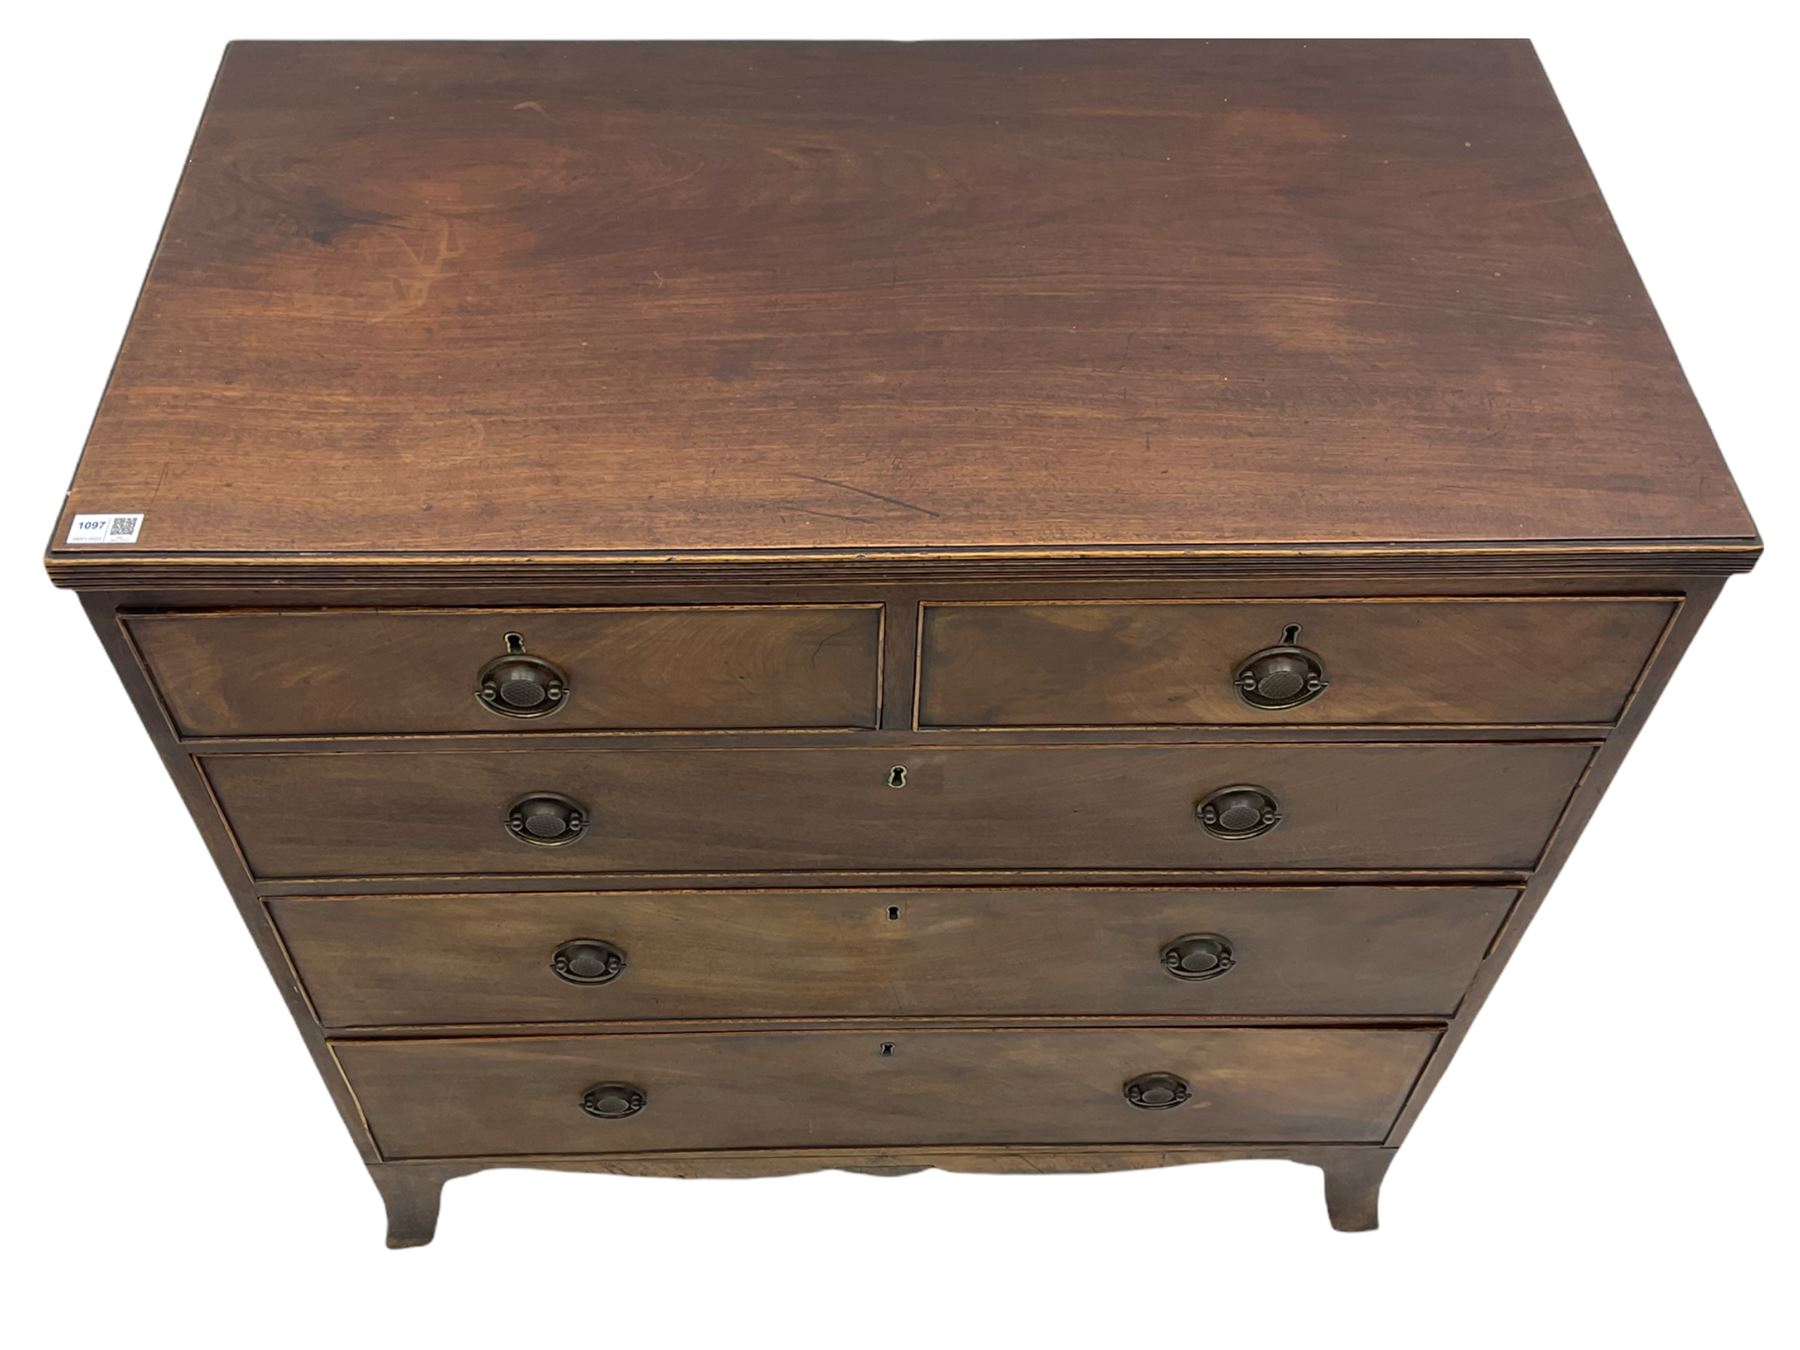 19th century mahogany chest - Image 6 of 7